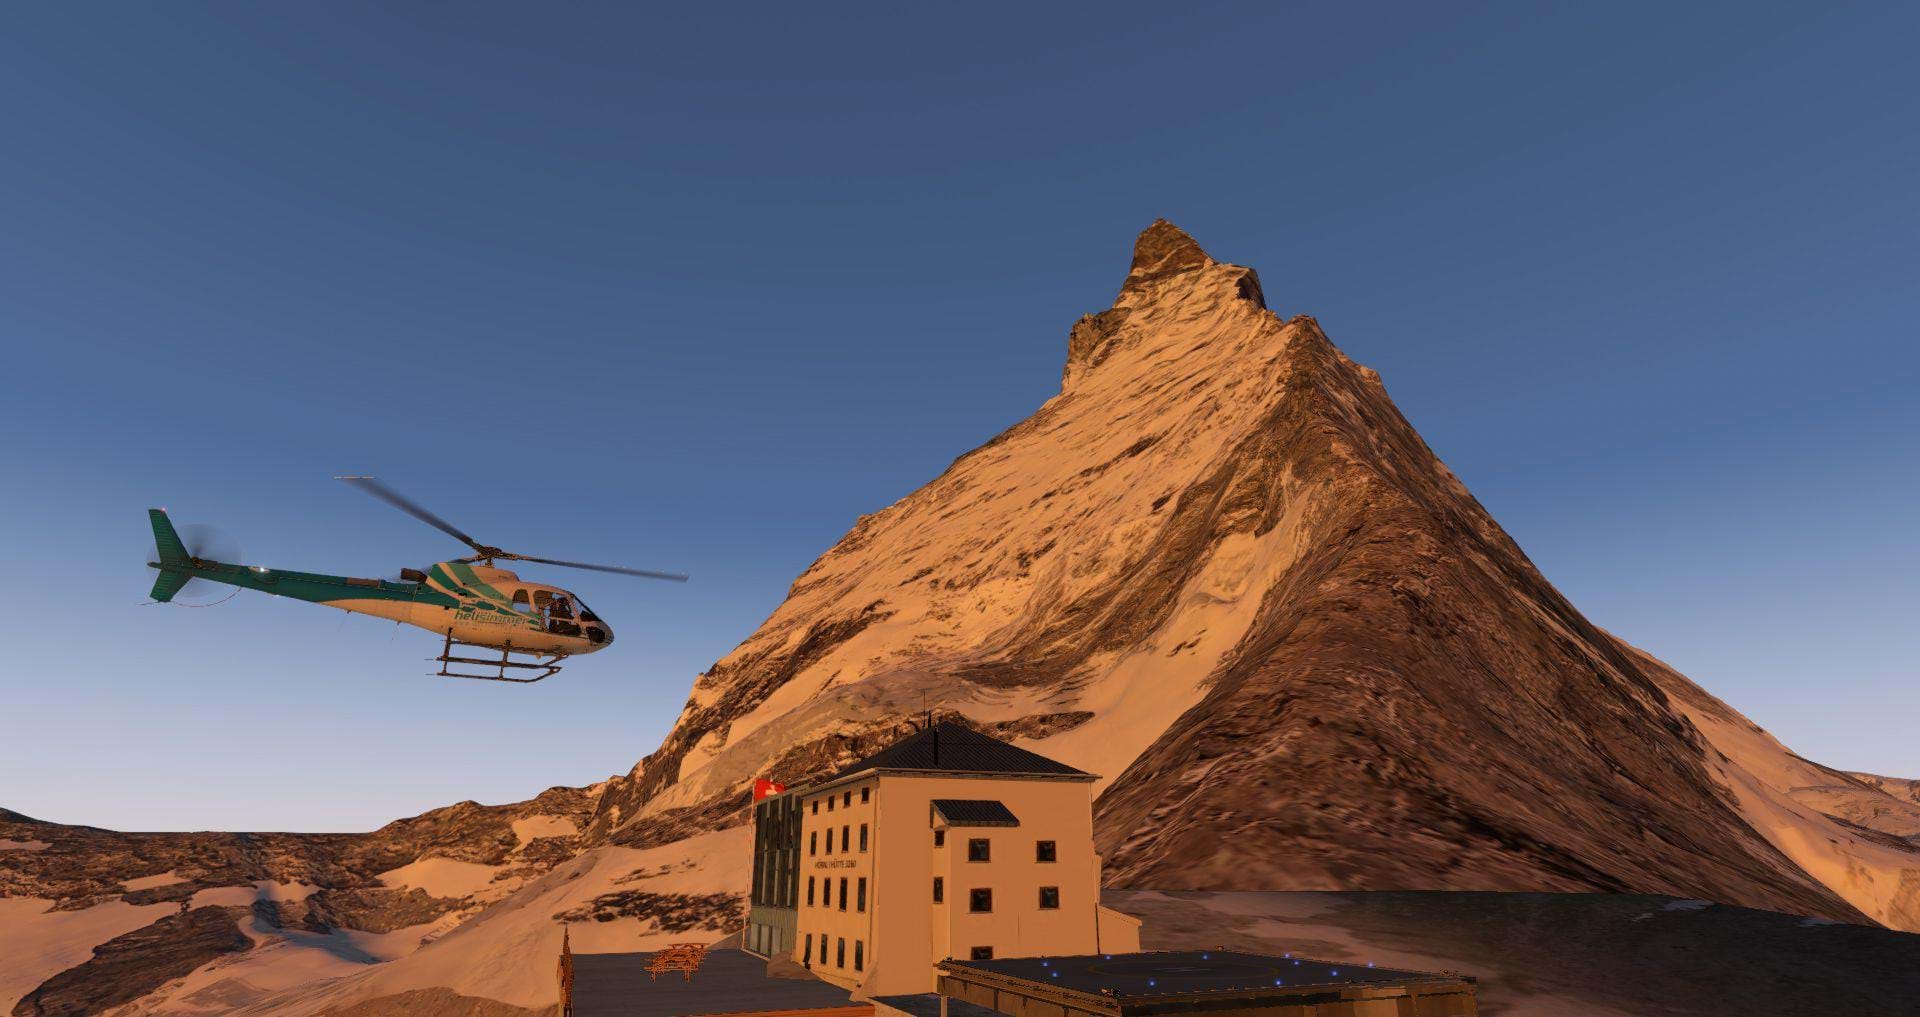 Frank Dainese's Matterhorn for X-Plane - Helipad